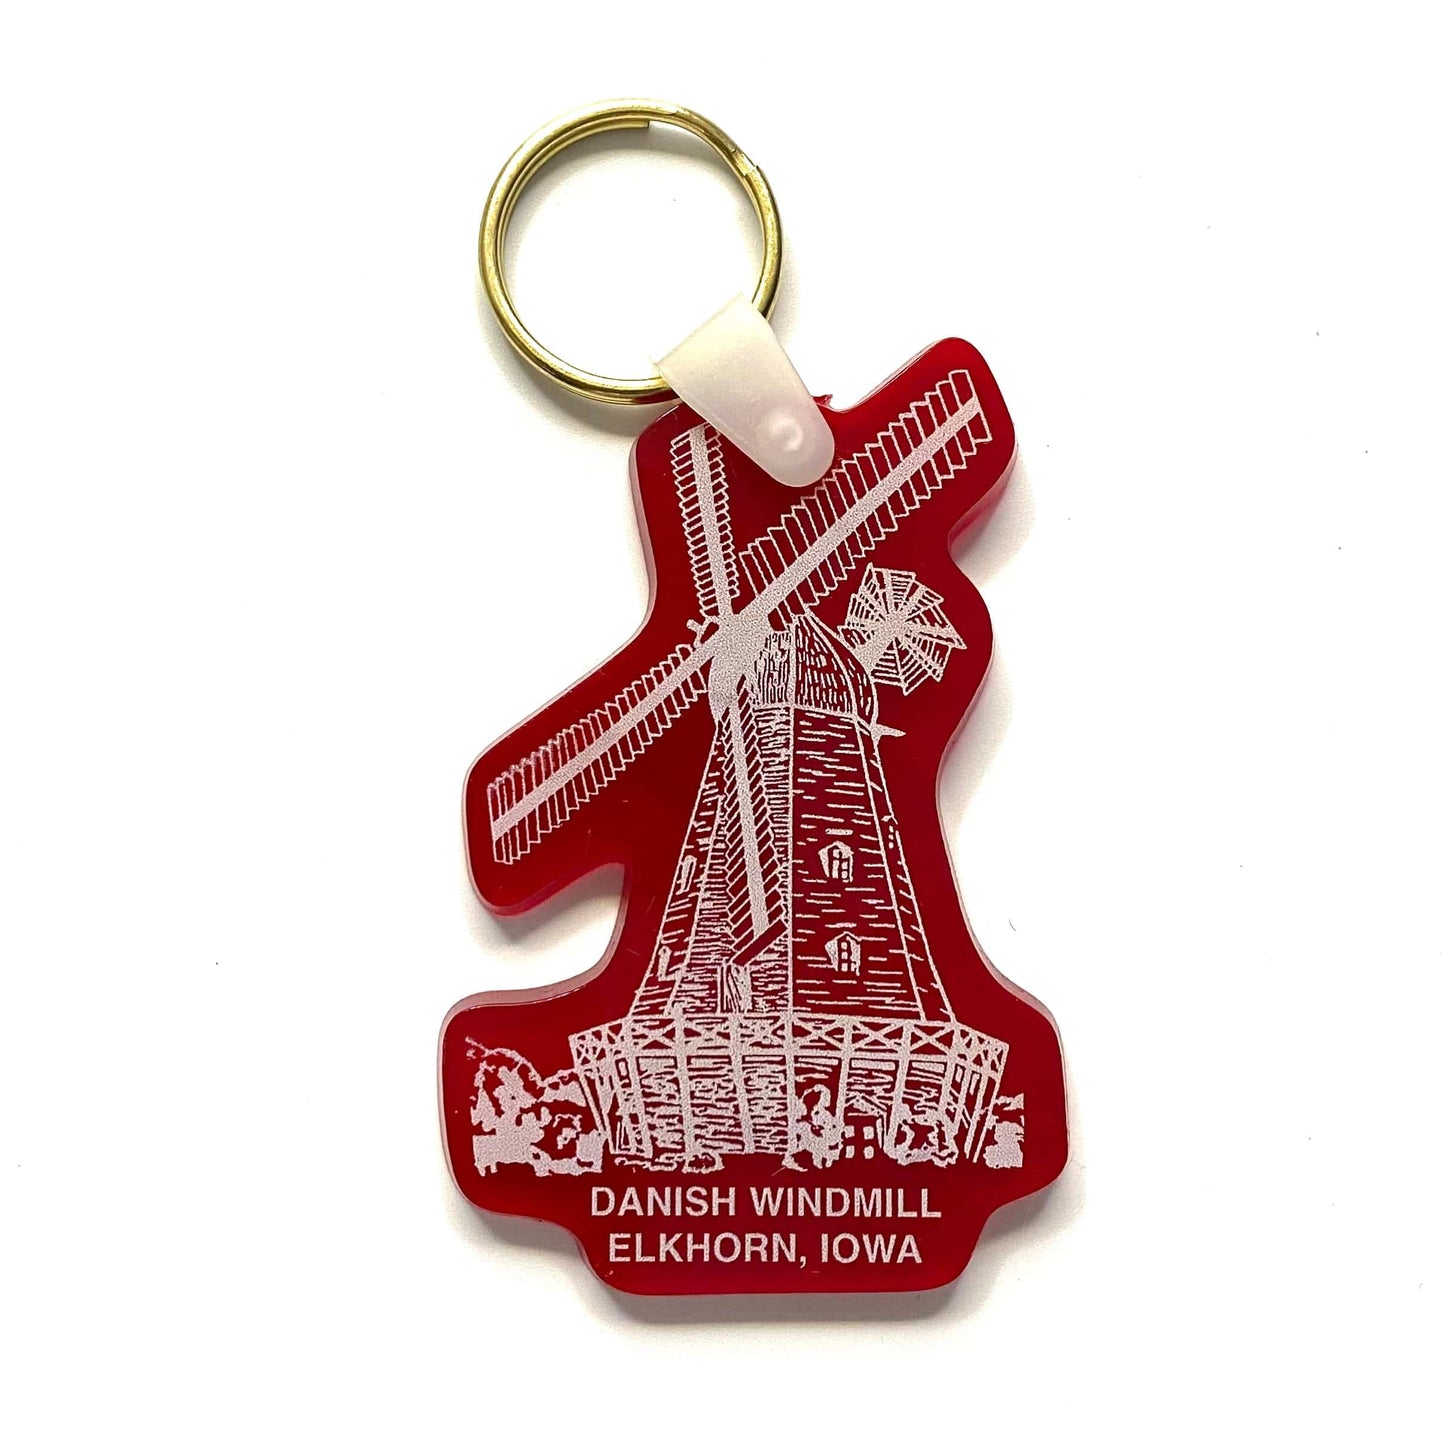 Vintage Elkhorn, Iowa Danish Windmill Souvenir Keychain Key Ring Rubber Red